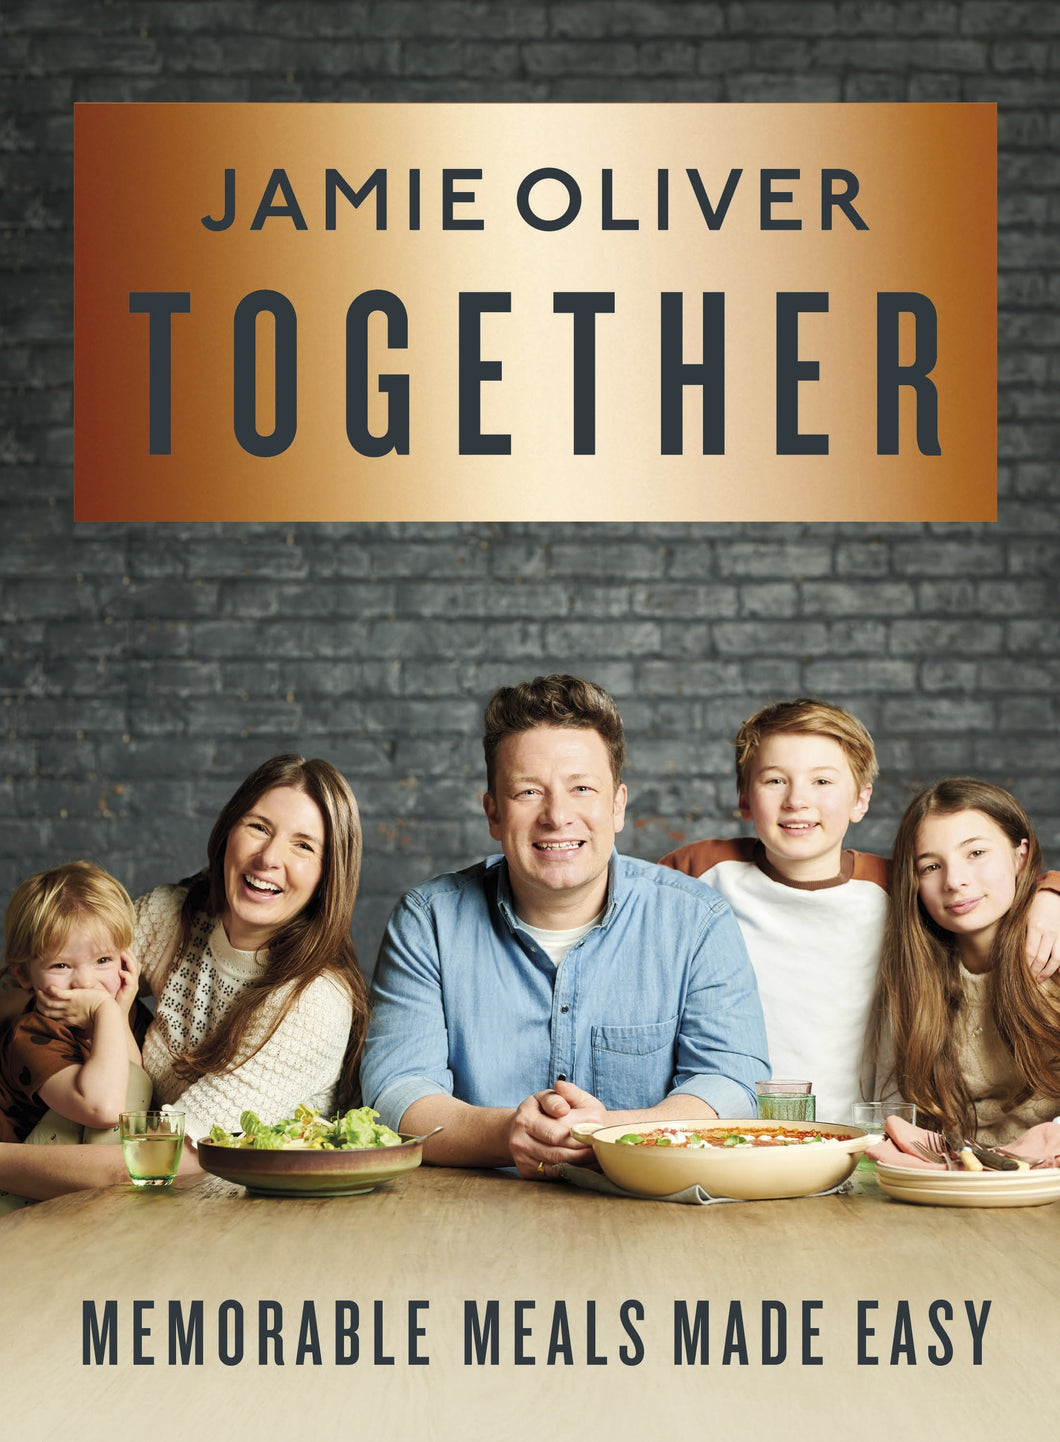 Together by Jamie Oliver